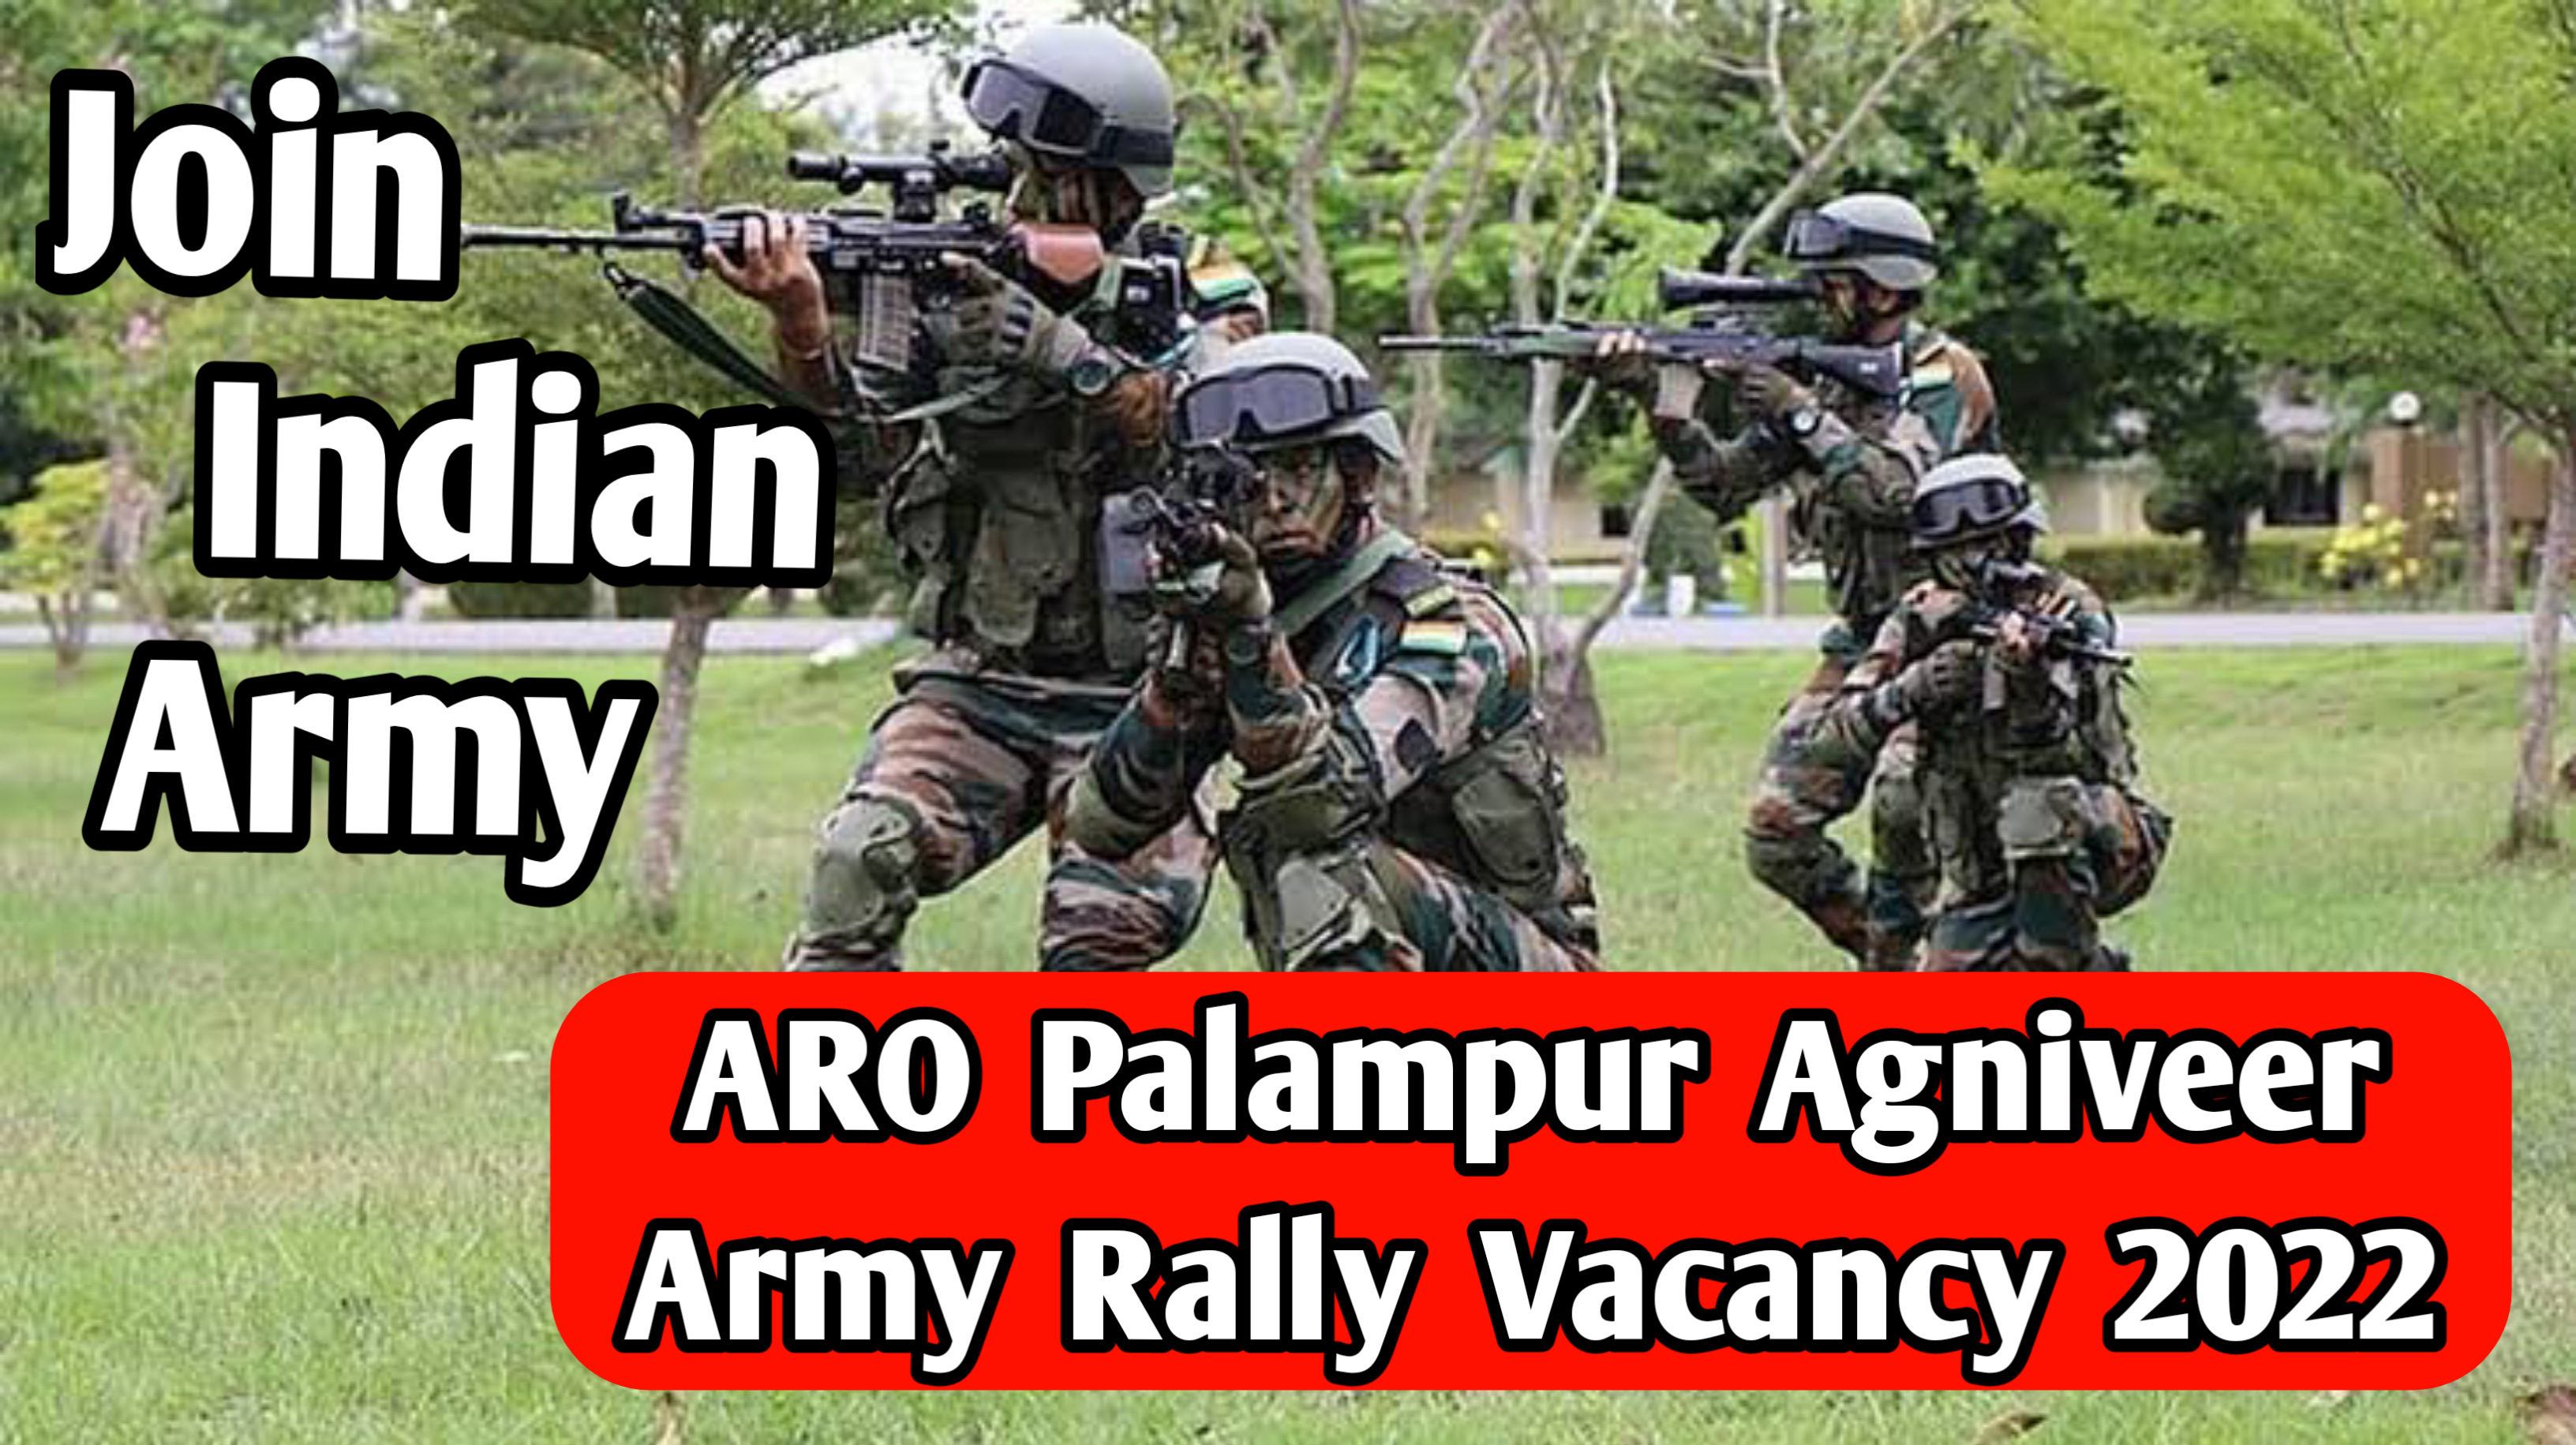 ARO Palampur Agniveer Army Rally Vacancy 2022